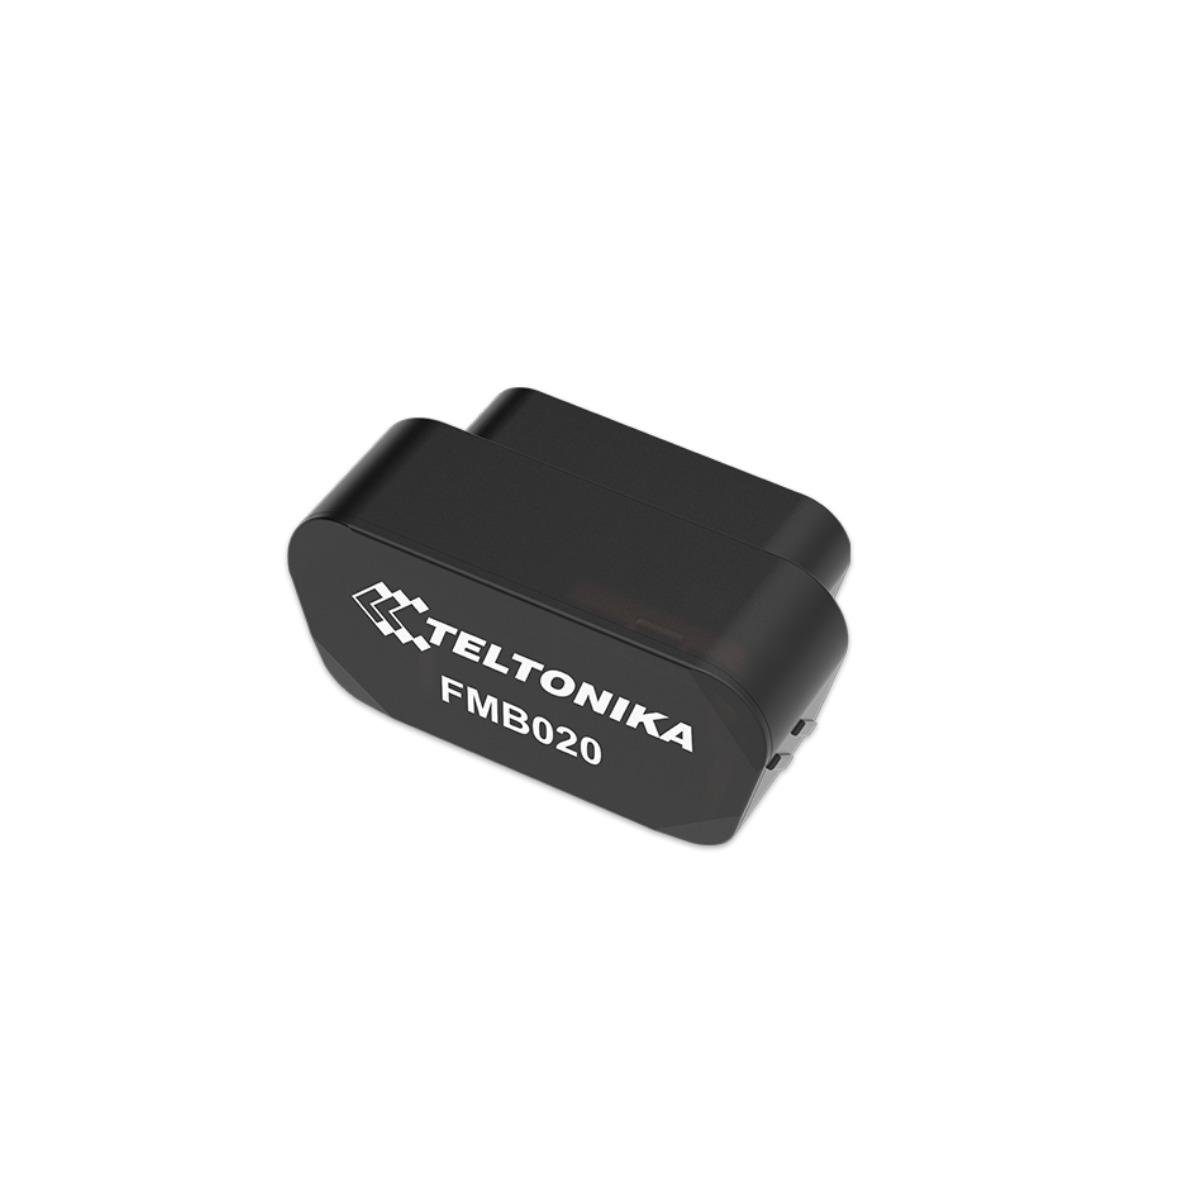 Teltonika FMB020 - Kleines GPS-Tracker OBD-Tracking-Terminal